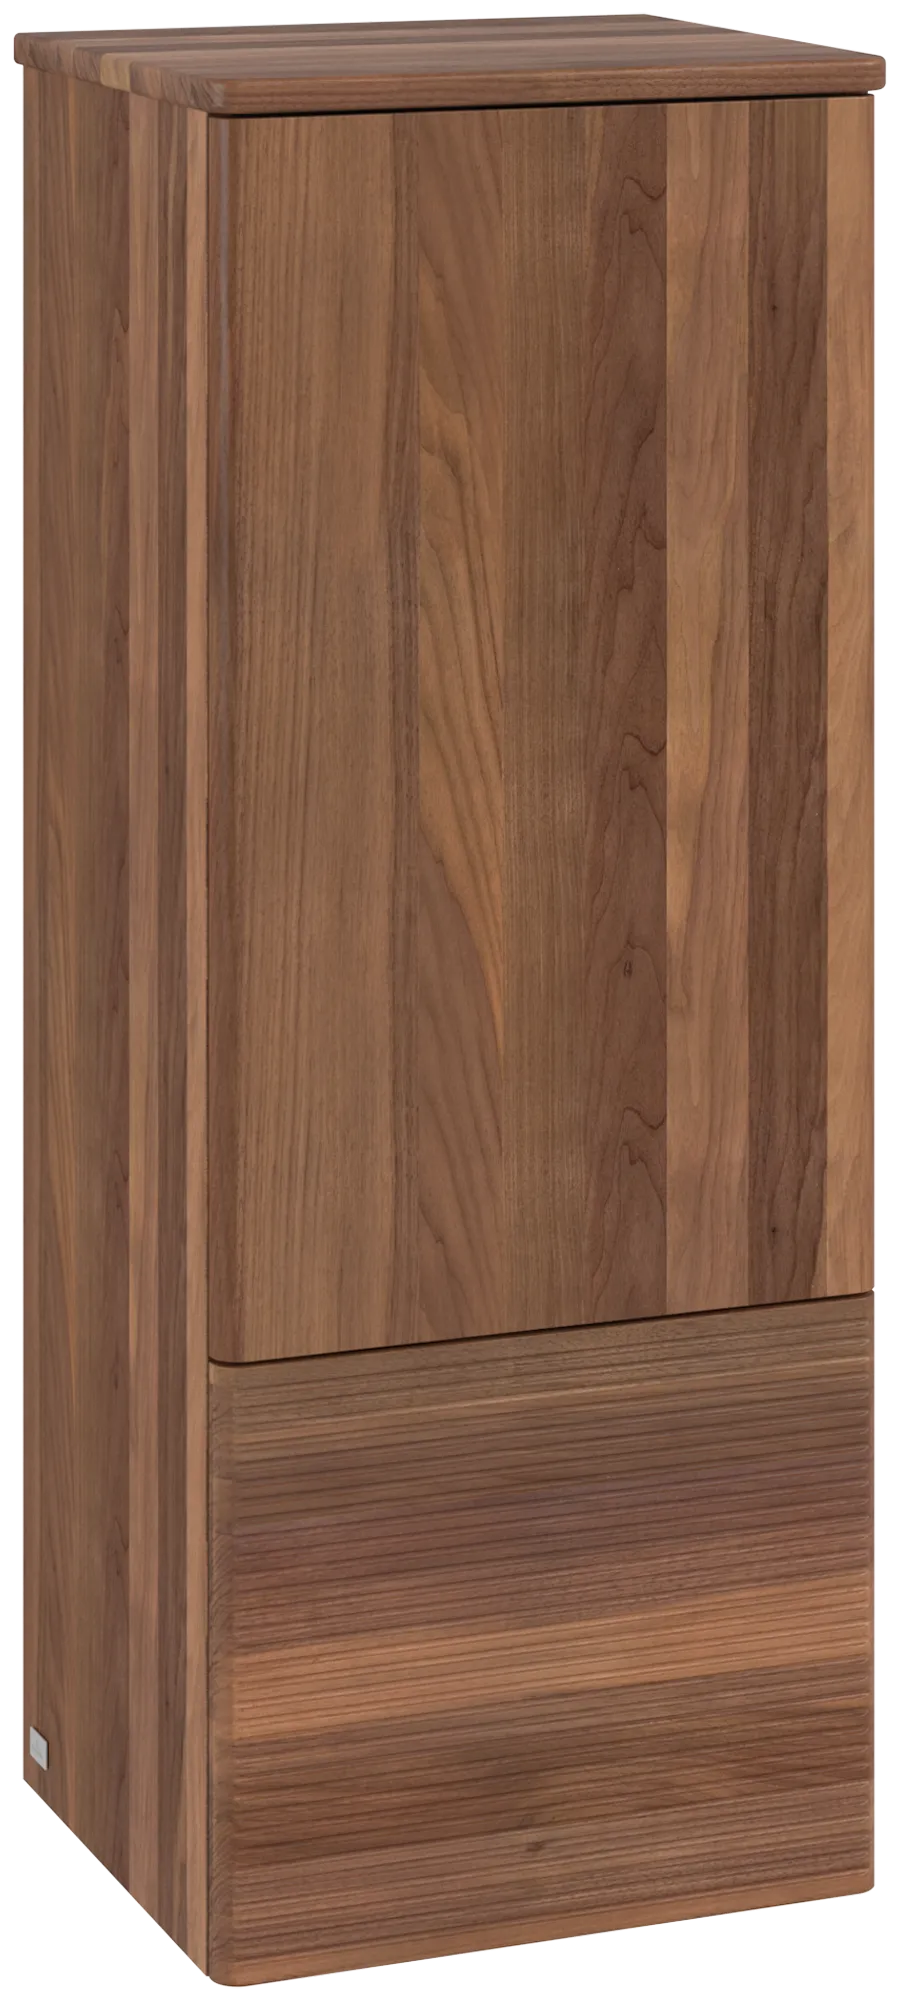 Picture of VILLEROY BOCH Antao Medium-height cabinet, 1 door, 414 x 1039 x 356 mm, Front with grain texture, Warm Walnut / Warm Walnut #K43100HM